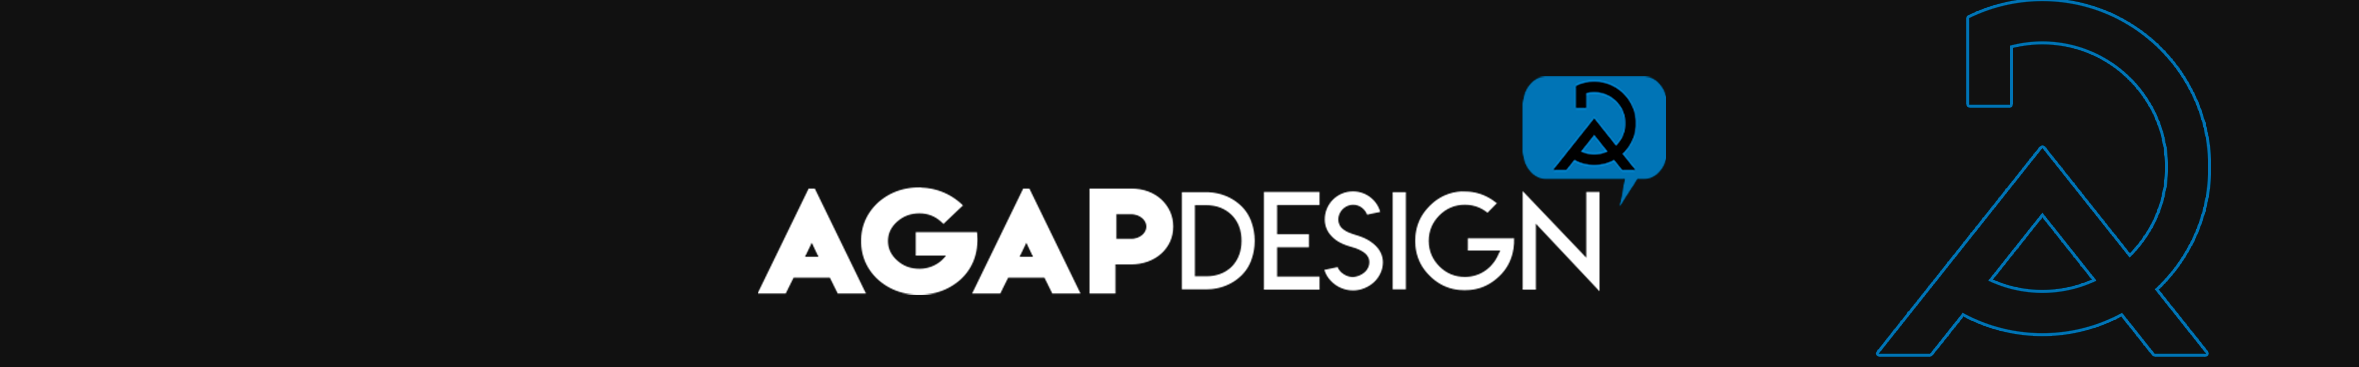 Baner profilu użytkownika Agap Design